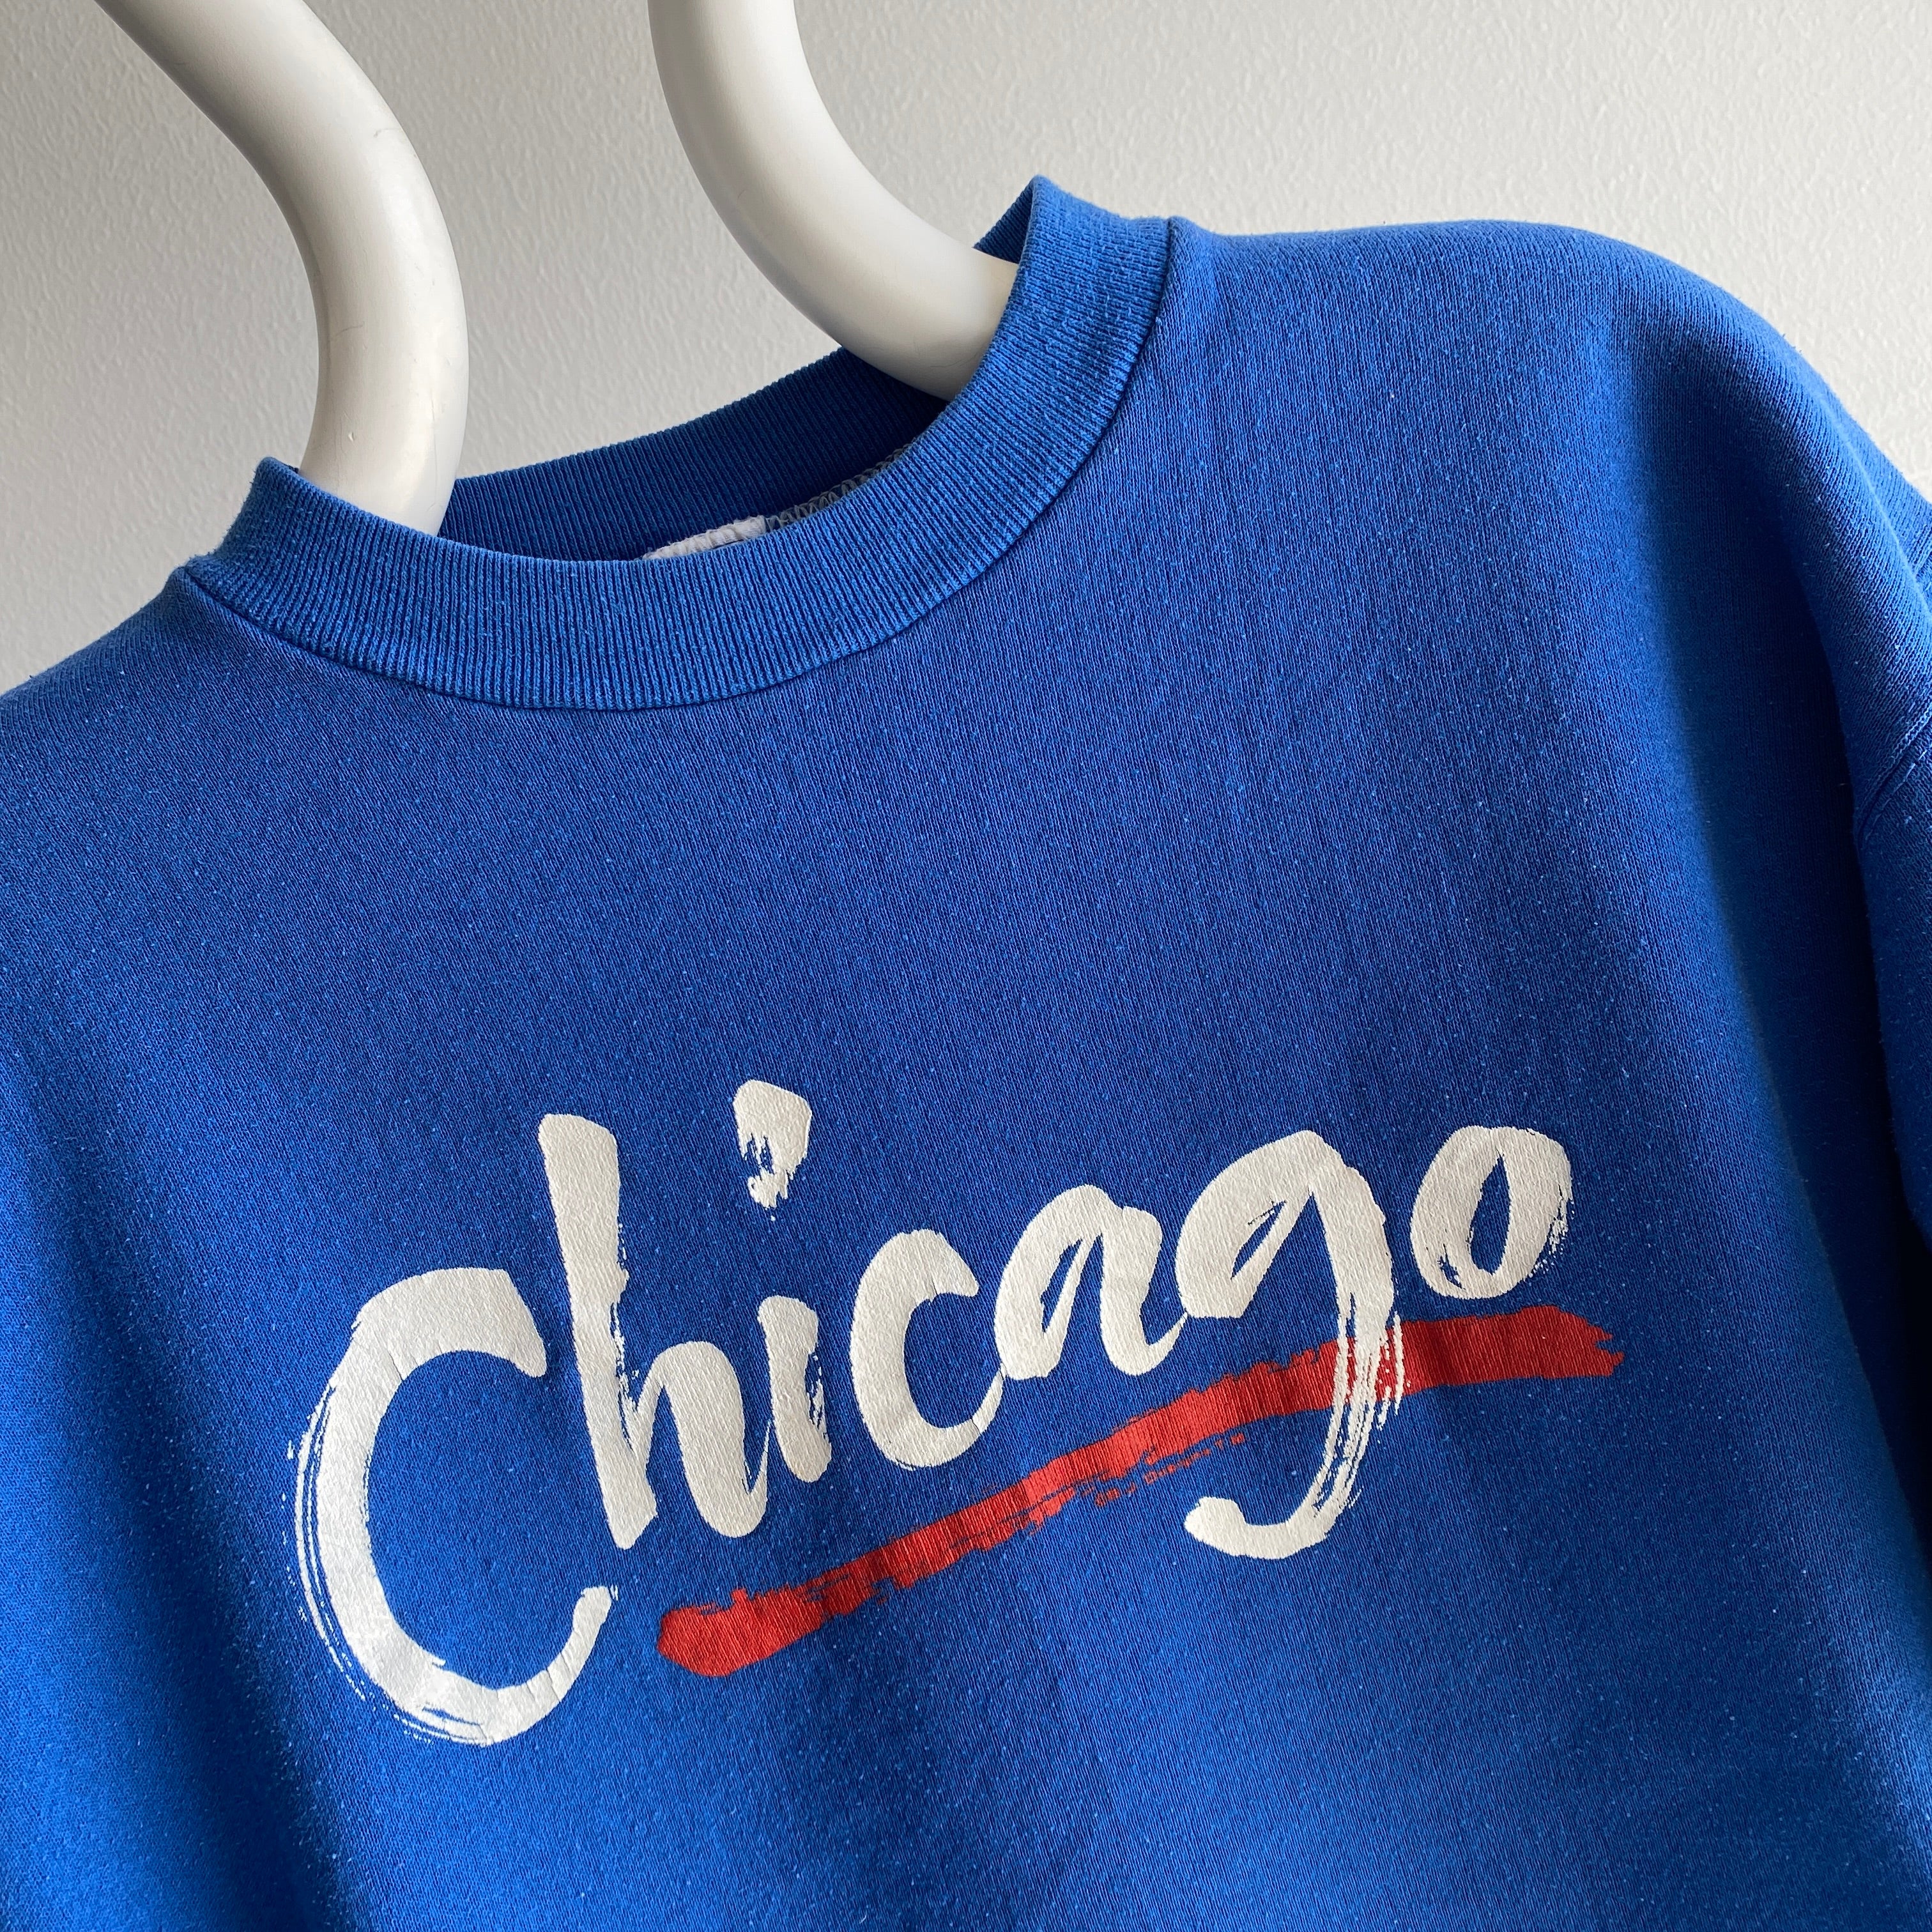 1980s Russell Brand Chicago Higher Crew Tourist Sweatshirt - Yes Please!